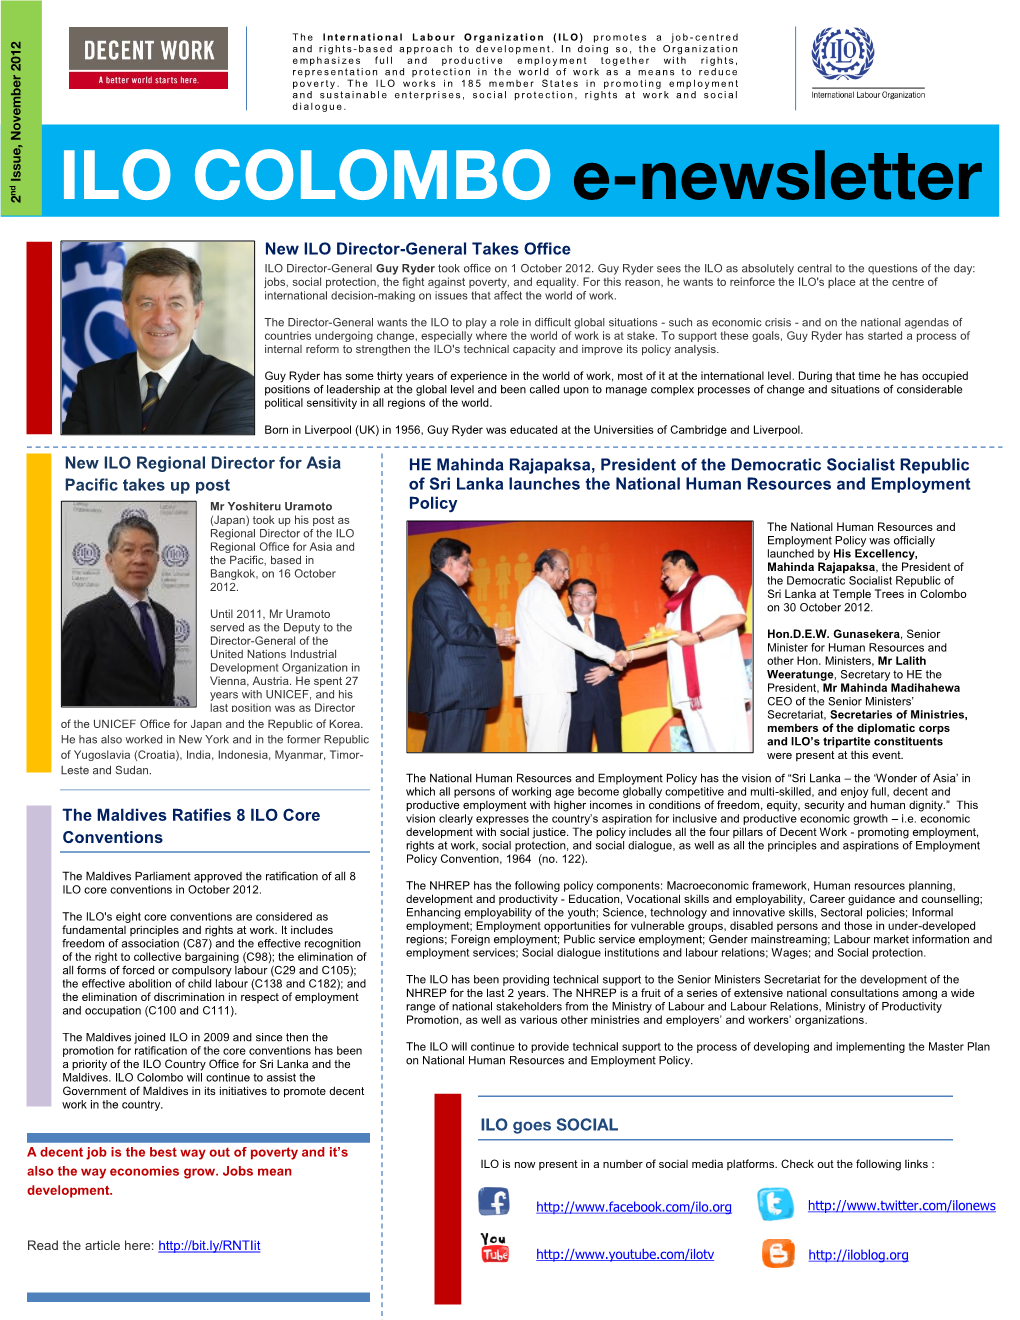 ILO COLOMBO E-Newsletter